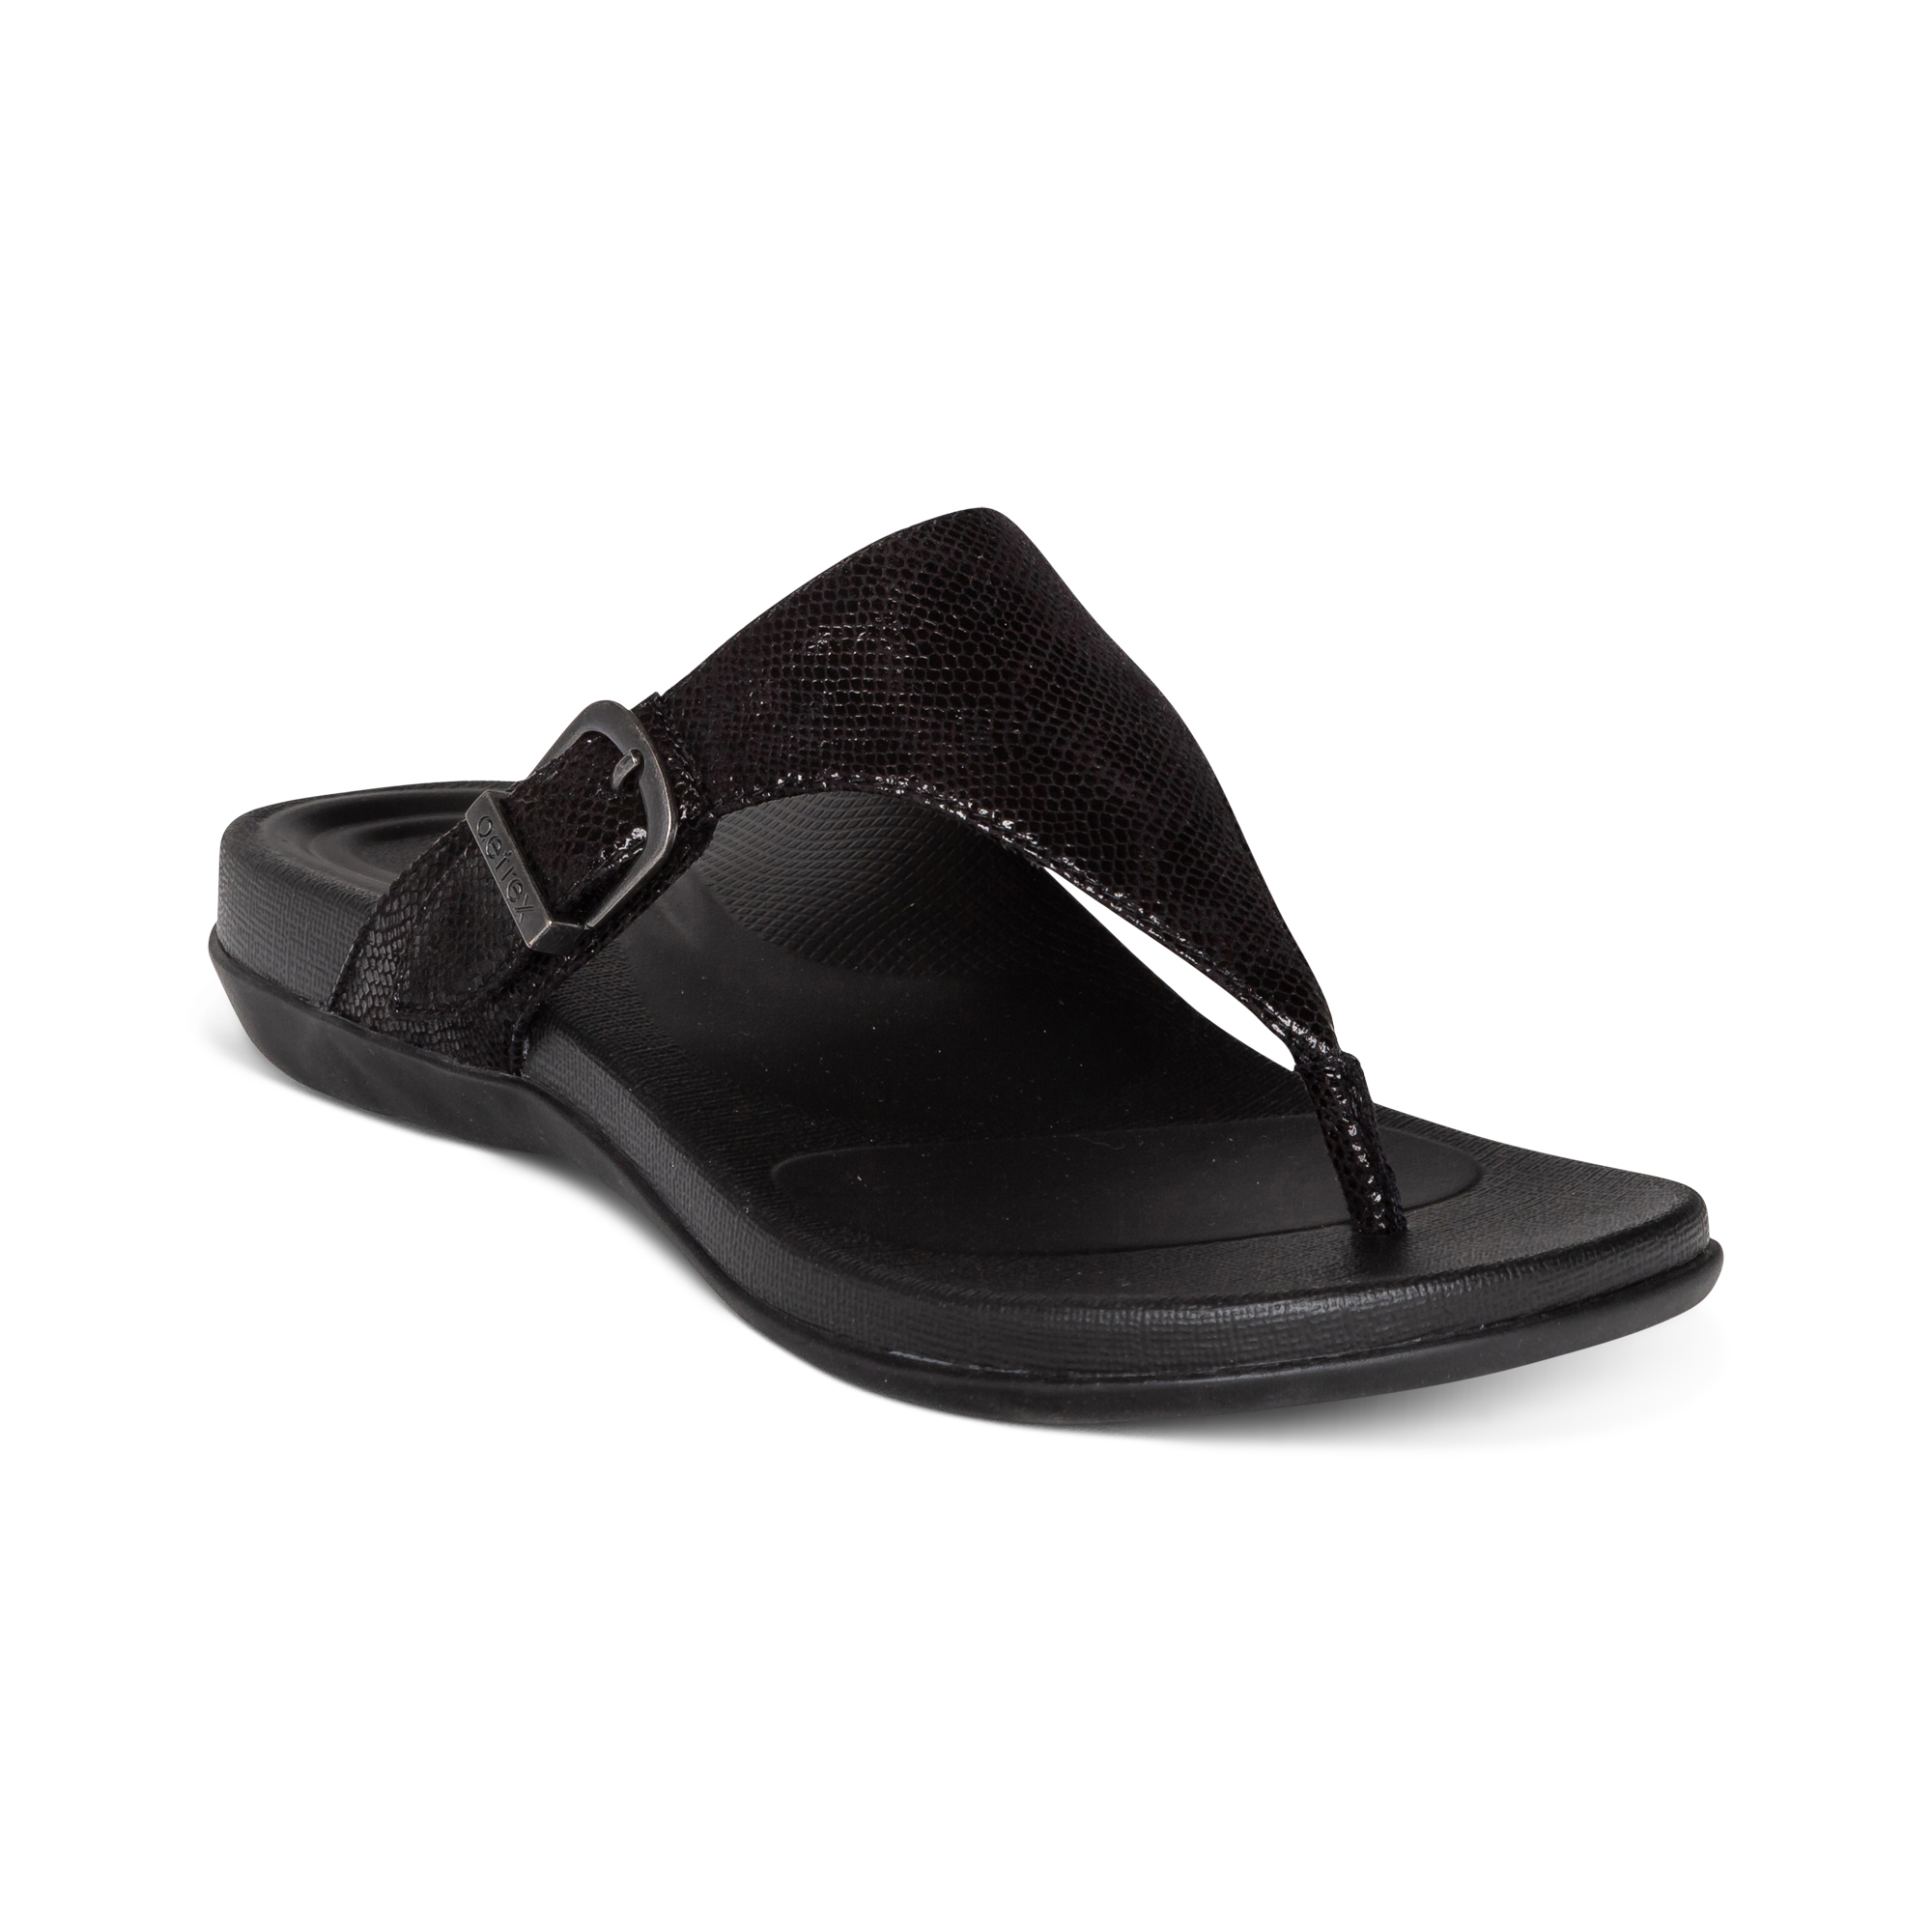 Day-Vine women's black wide strap platform sandals size 40 (US 9/9.5)